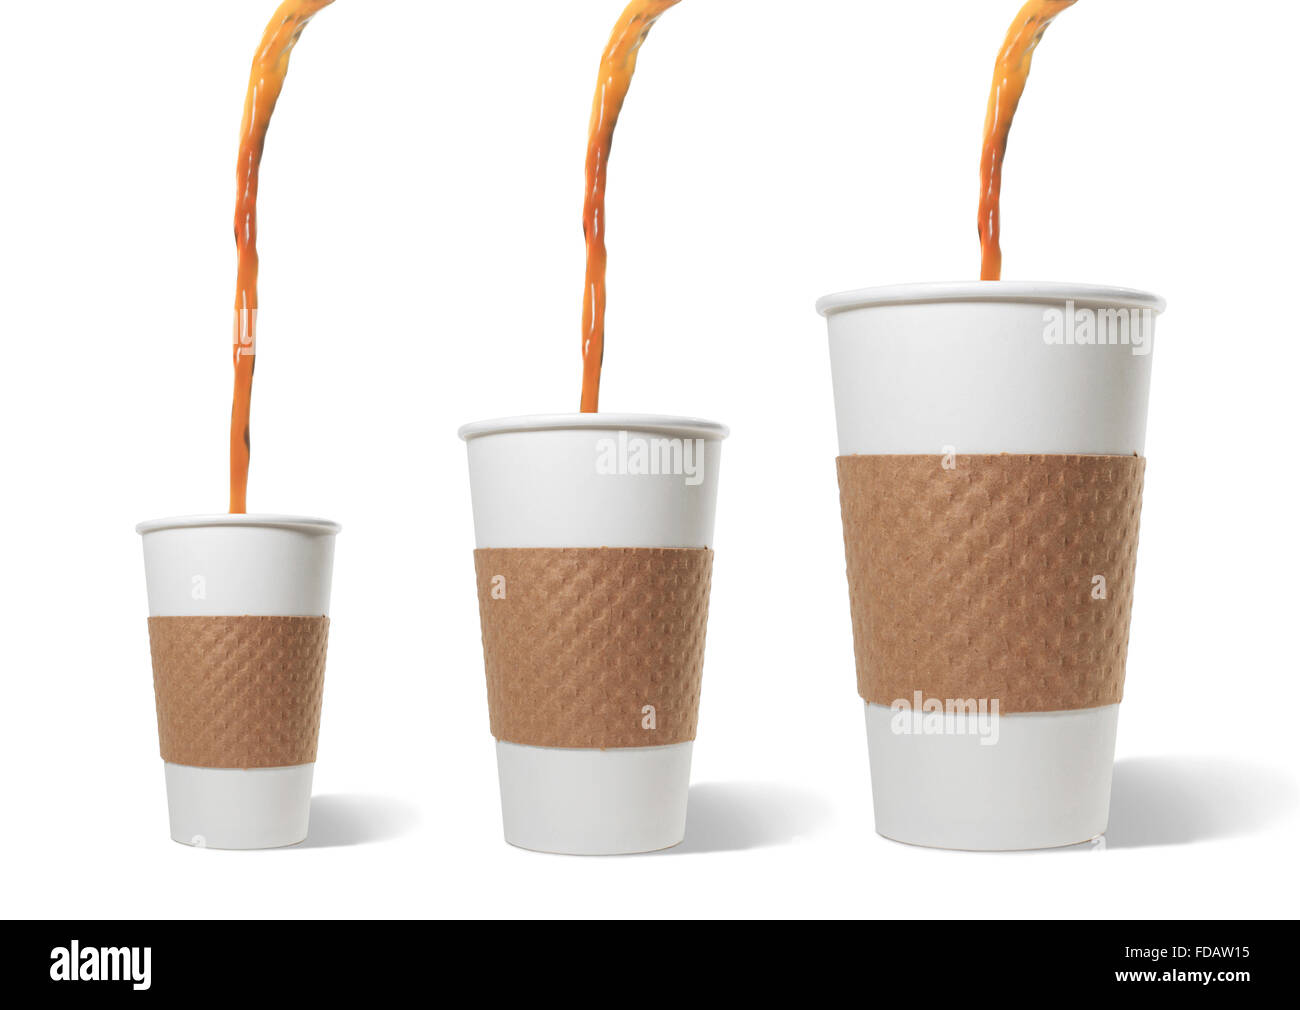 https://c8.alamy.com/comp/FDAW15/studio-shot-of-coffee-poured-into-three-sizes-of-paper-cups-FDAW15.jpg